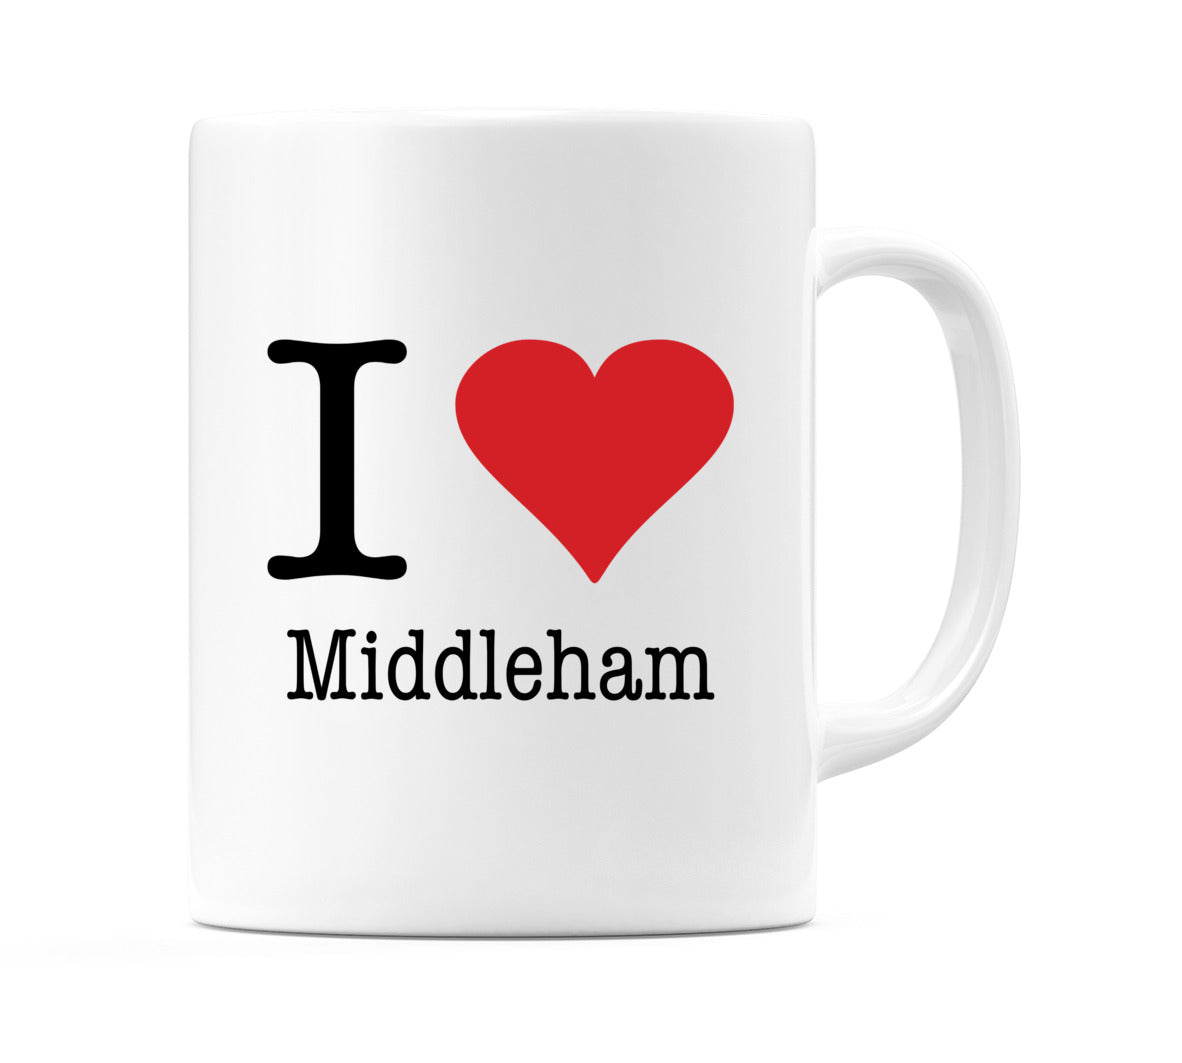 I Love Middleham Mug